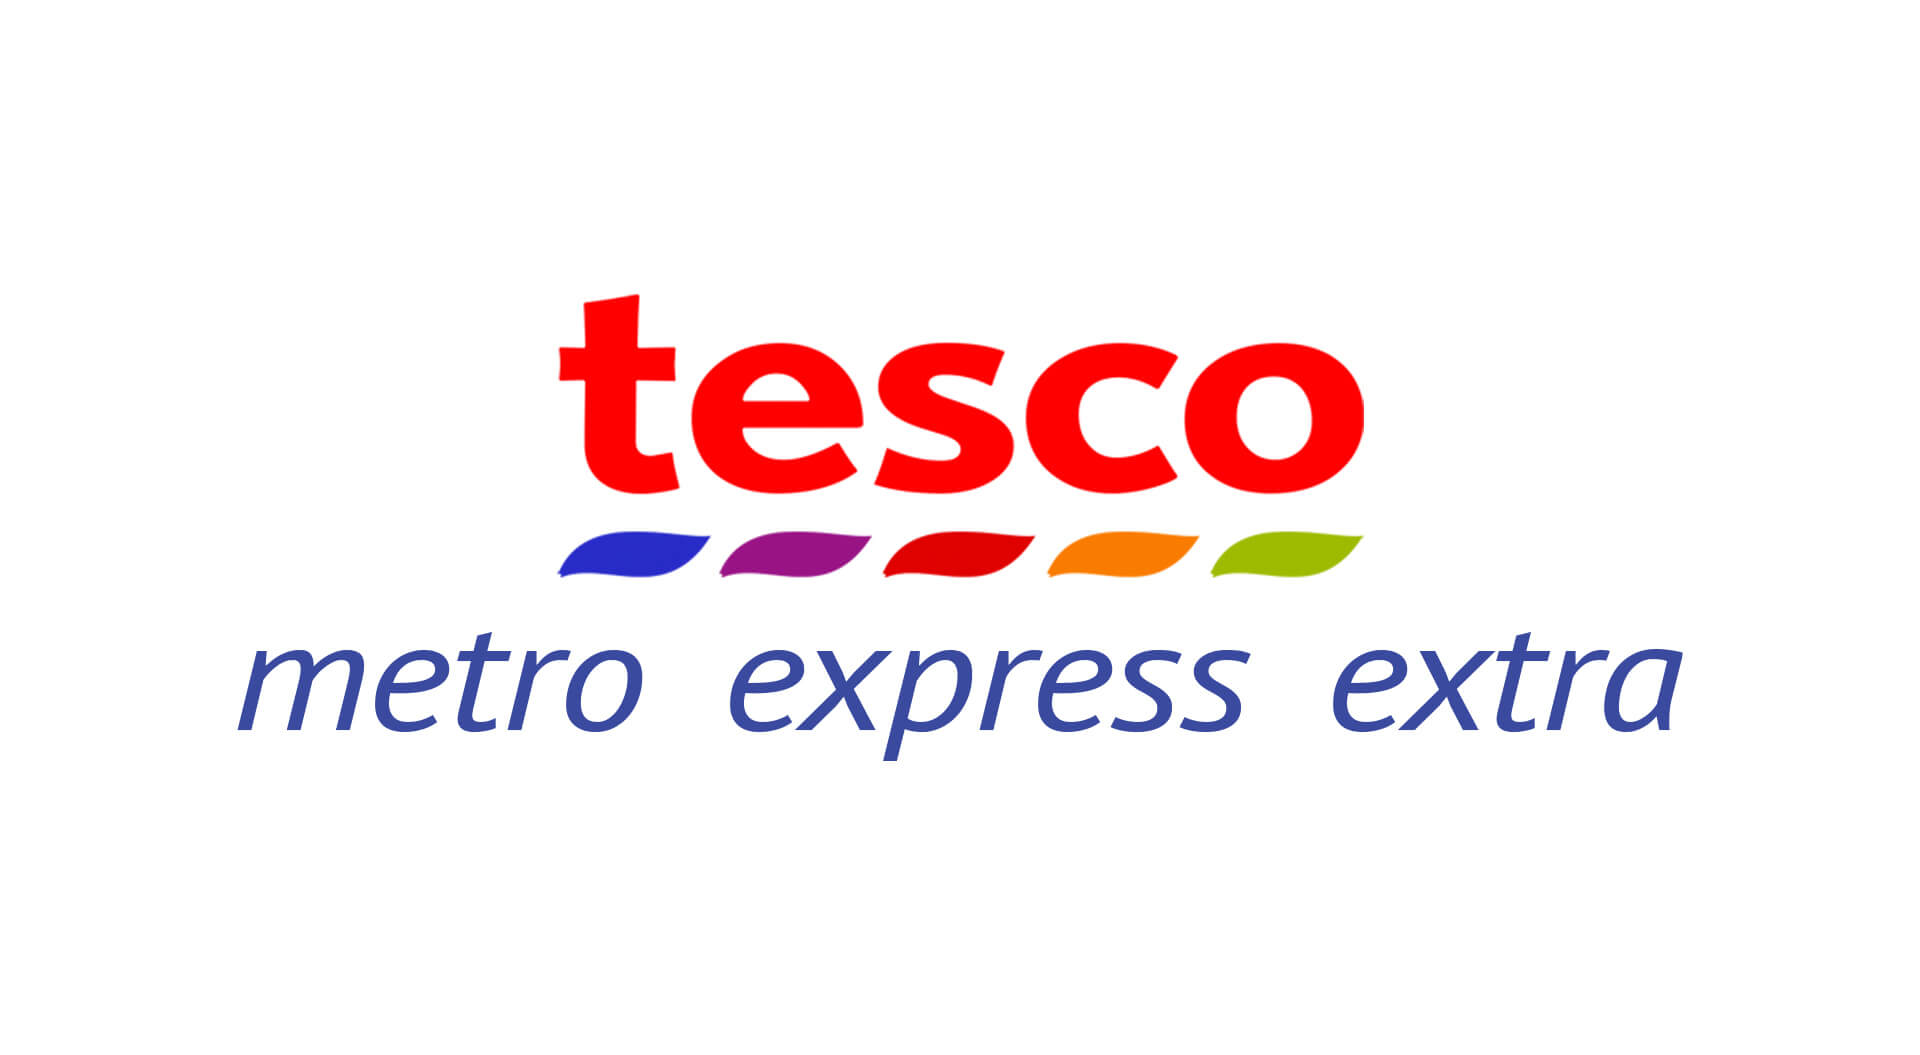 Rebranding Tesco brand identity and sub brands